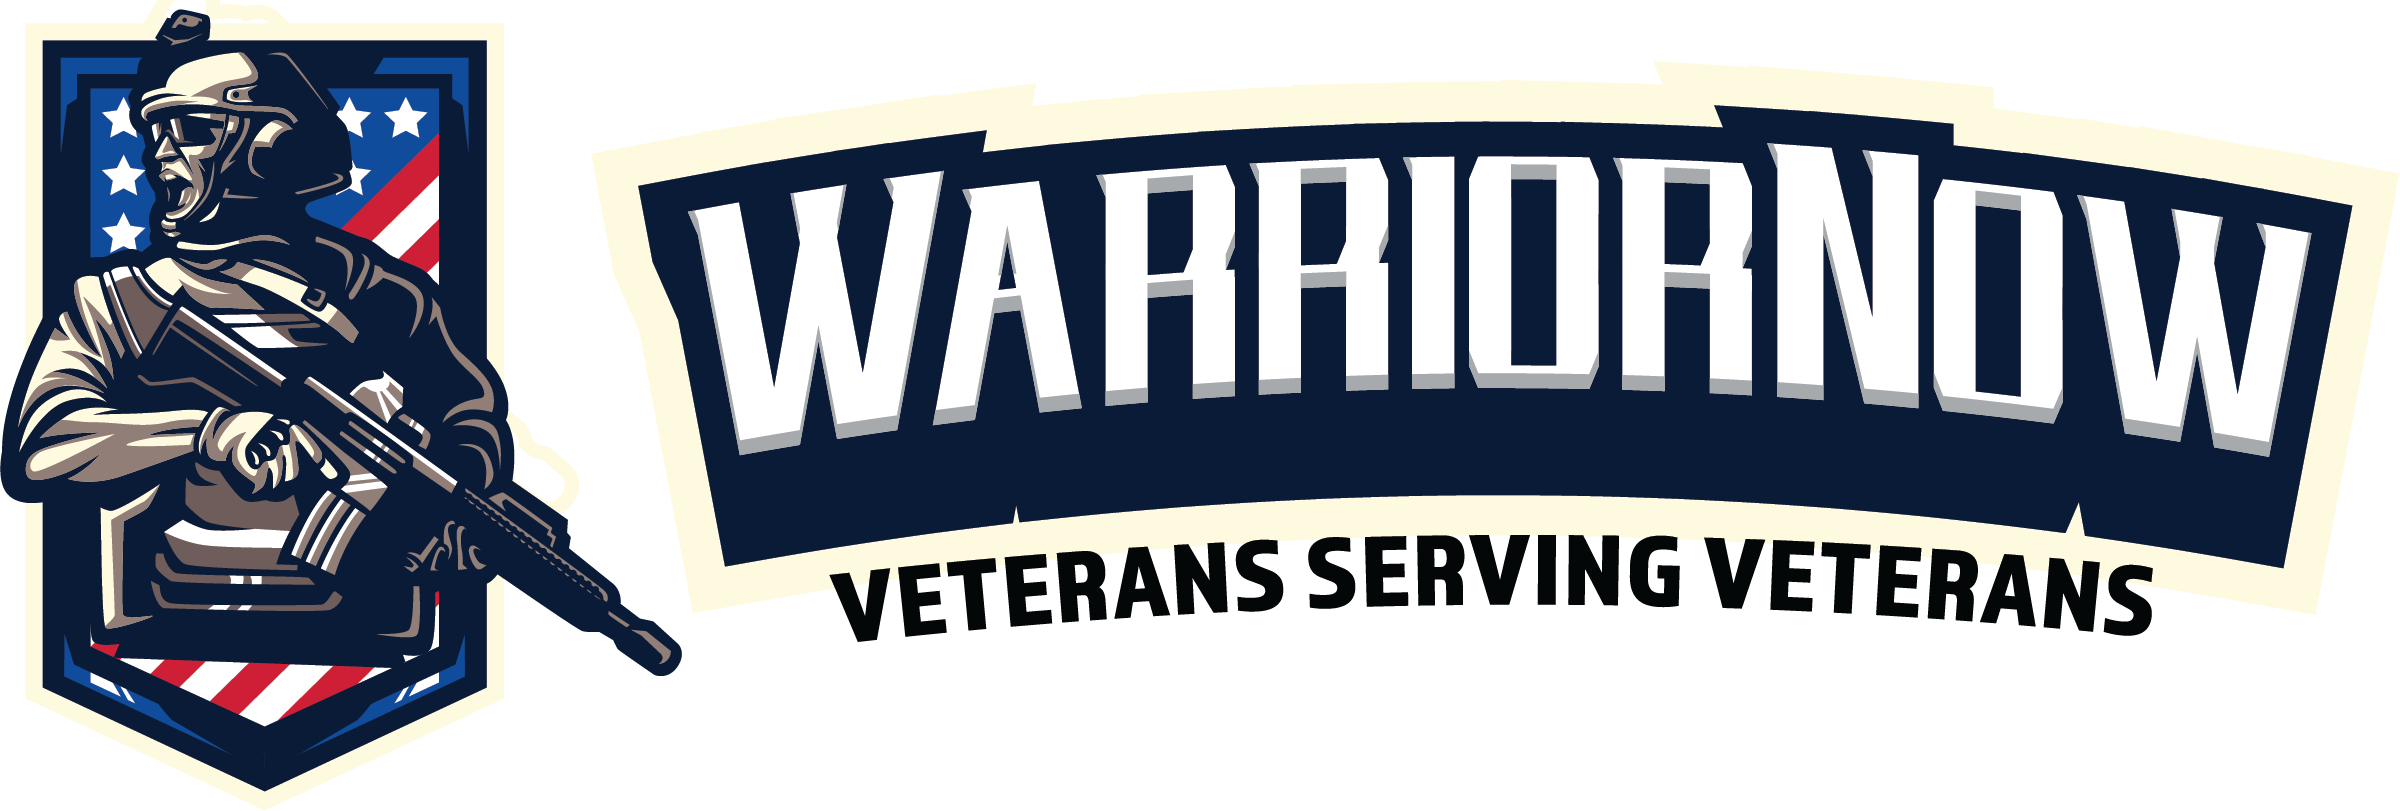 WarriorNOW